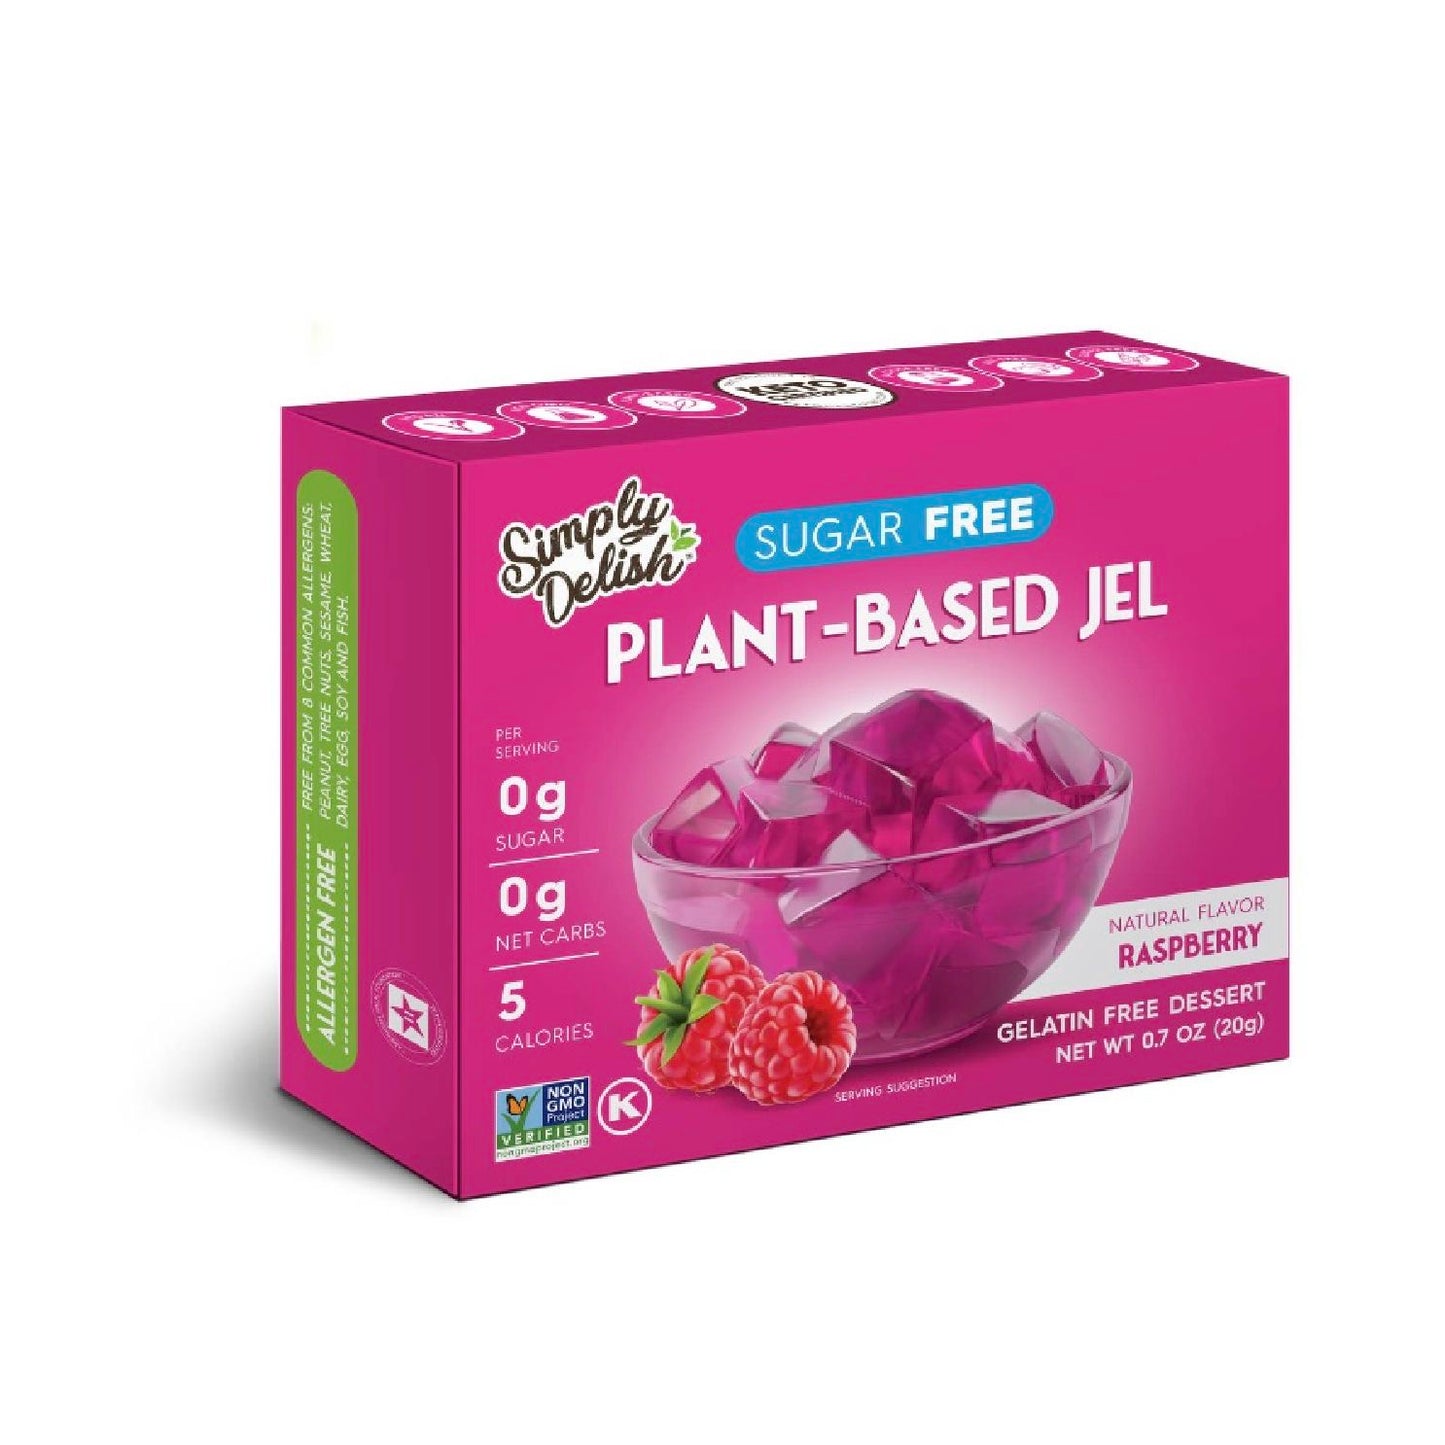 Simply delish Sugar Free Vegan Jelly Dessert Raspberry 44g - Sweet Victory Products Ltd